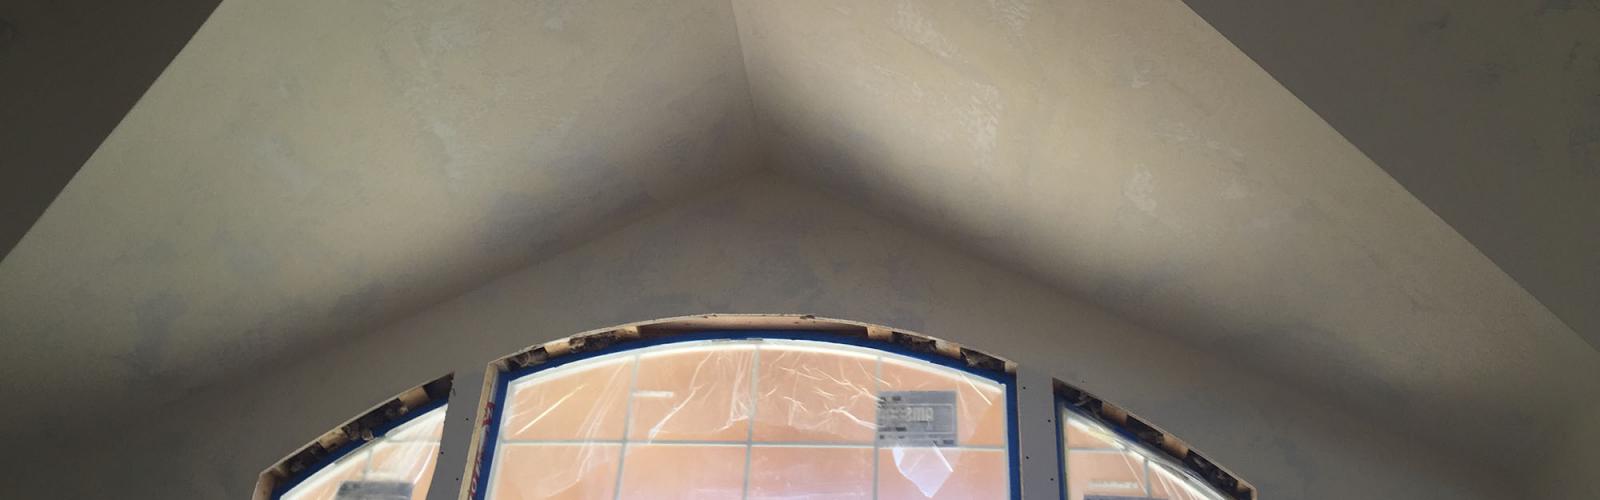 interior great room drywall, skip trowel mud finish